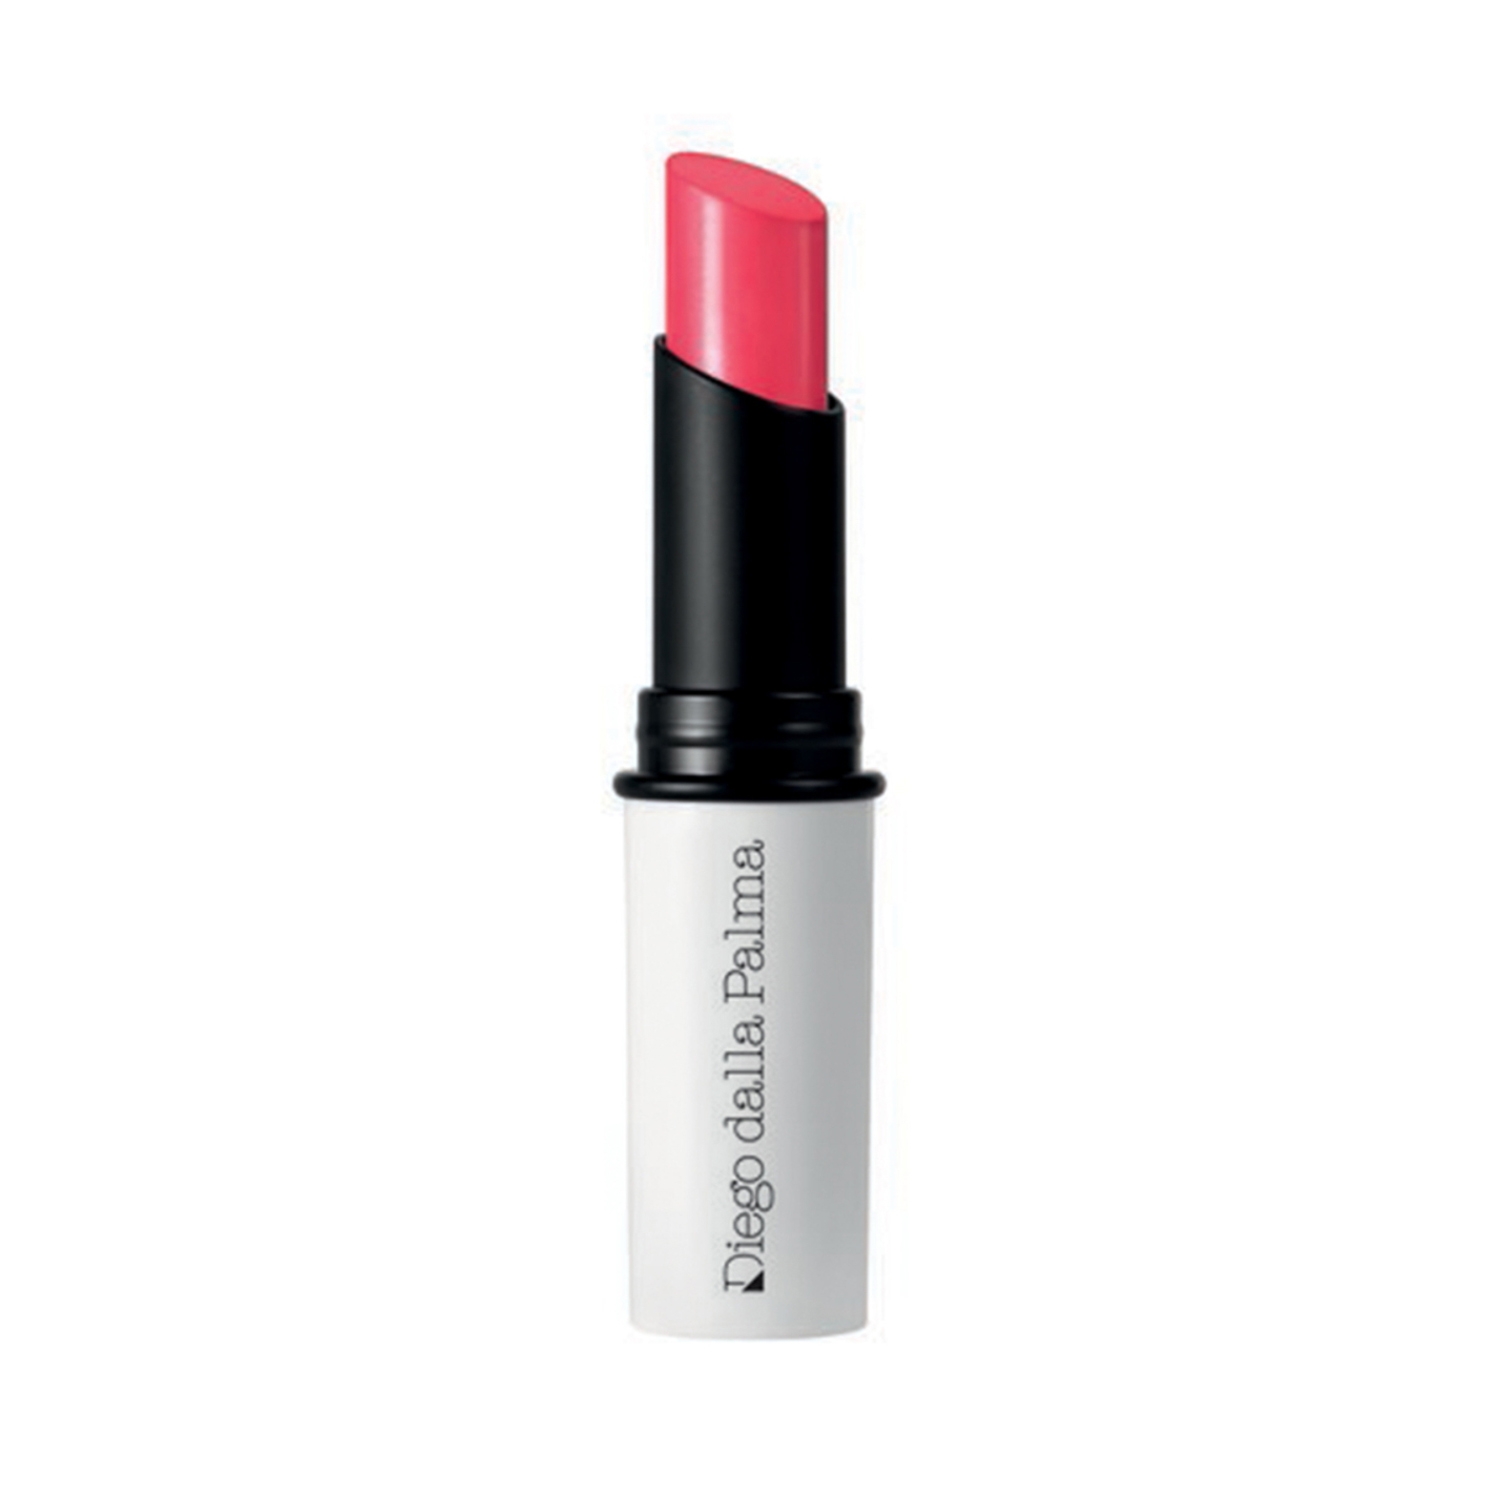 Diego Dalla Palma Milano | Diego Dalla Palma Milano Semitransparent Shiny Lipstick - 145 Pink (2.5ml)